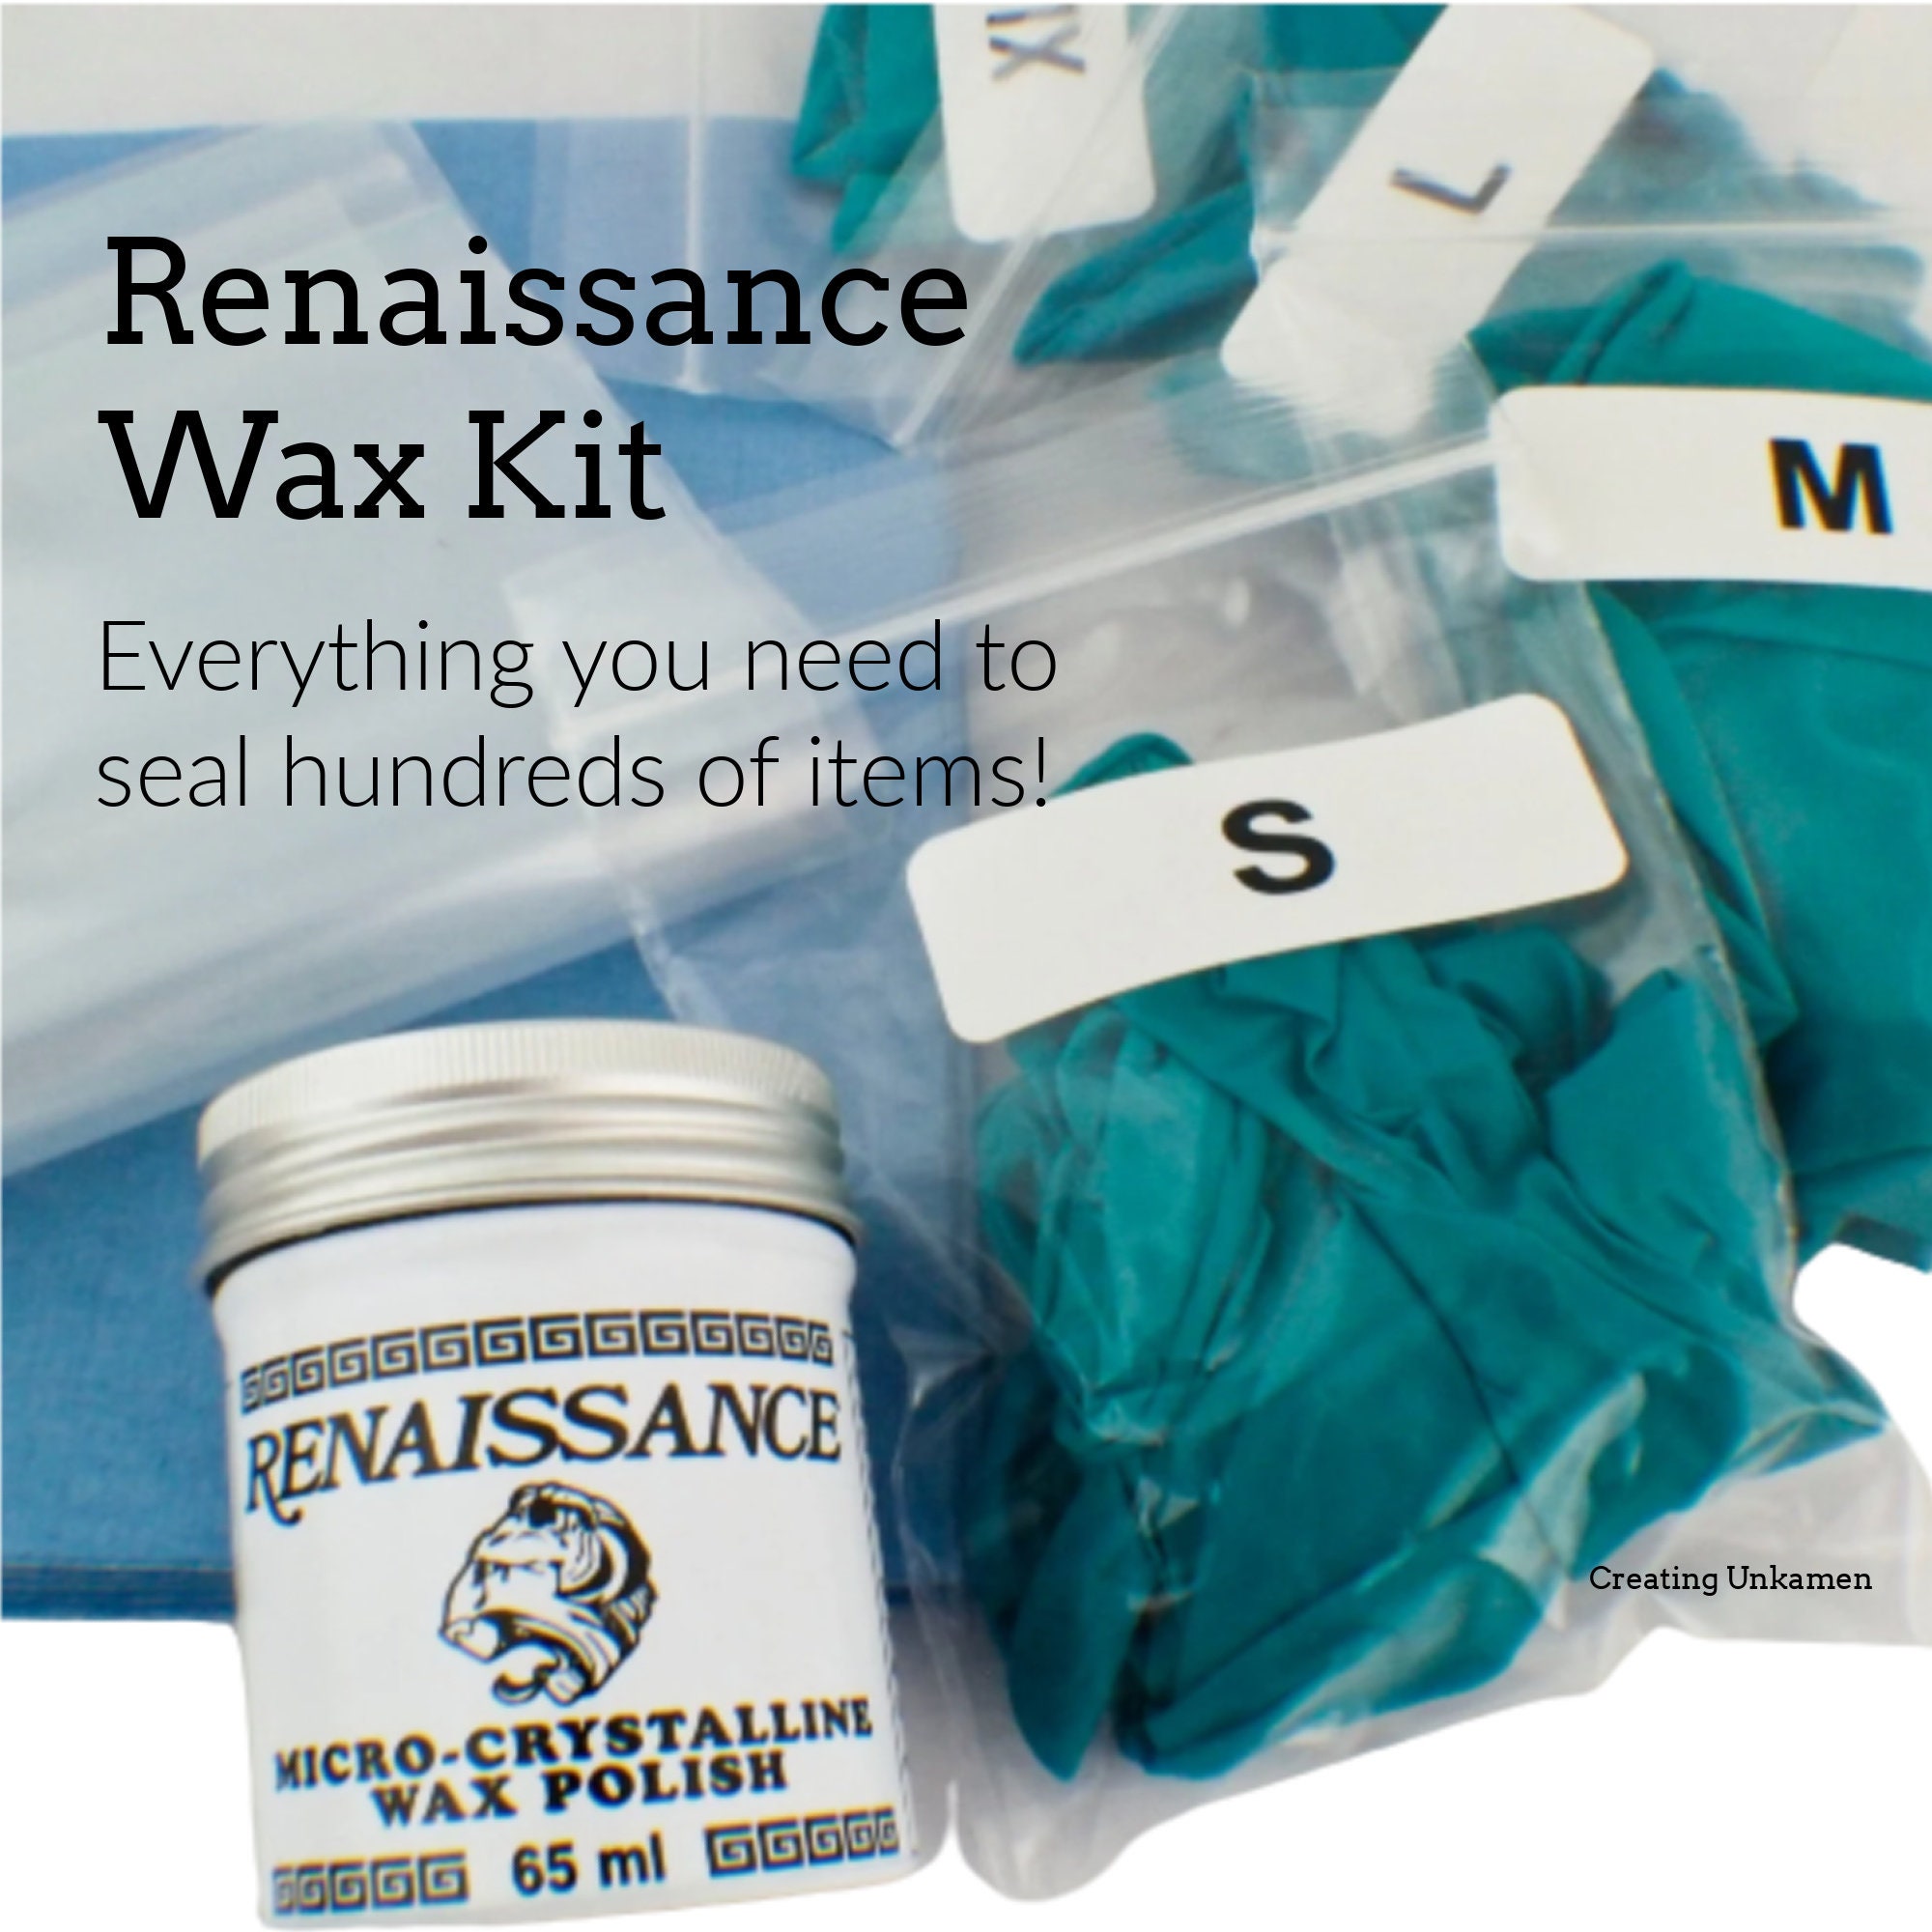 Renaissance Wax Protective Coating 2.3 oz